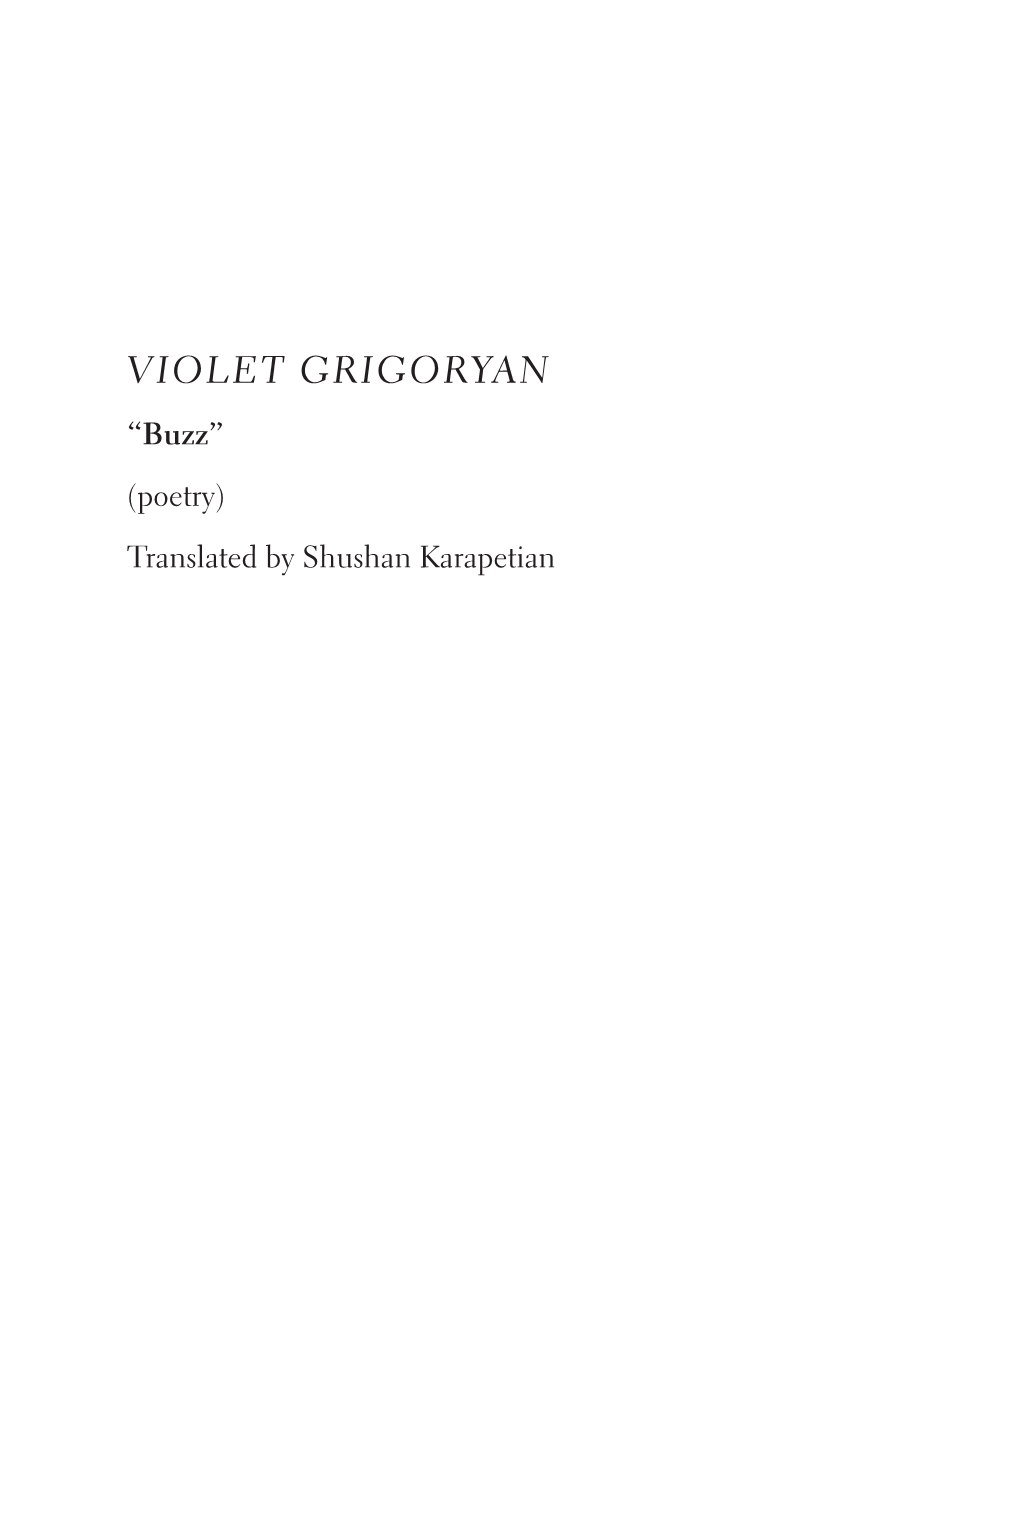 Violet Grigoryan “Buzz” (Poetry) Translated by Shushan Karapetian